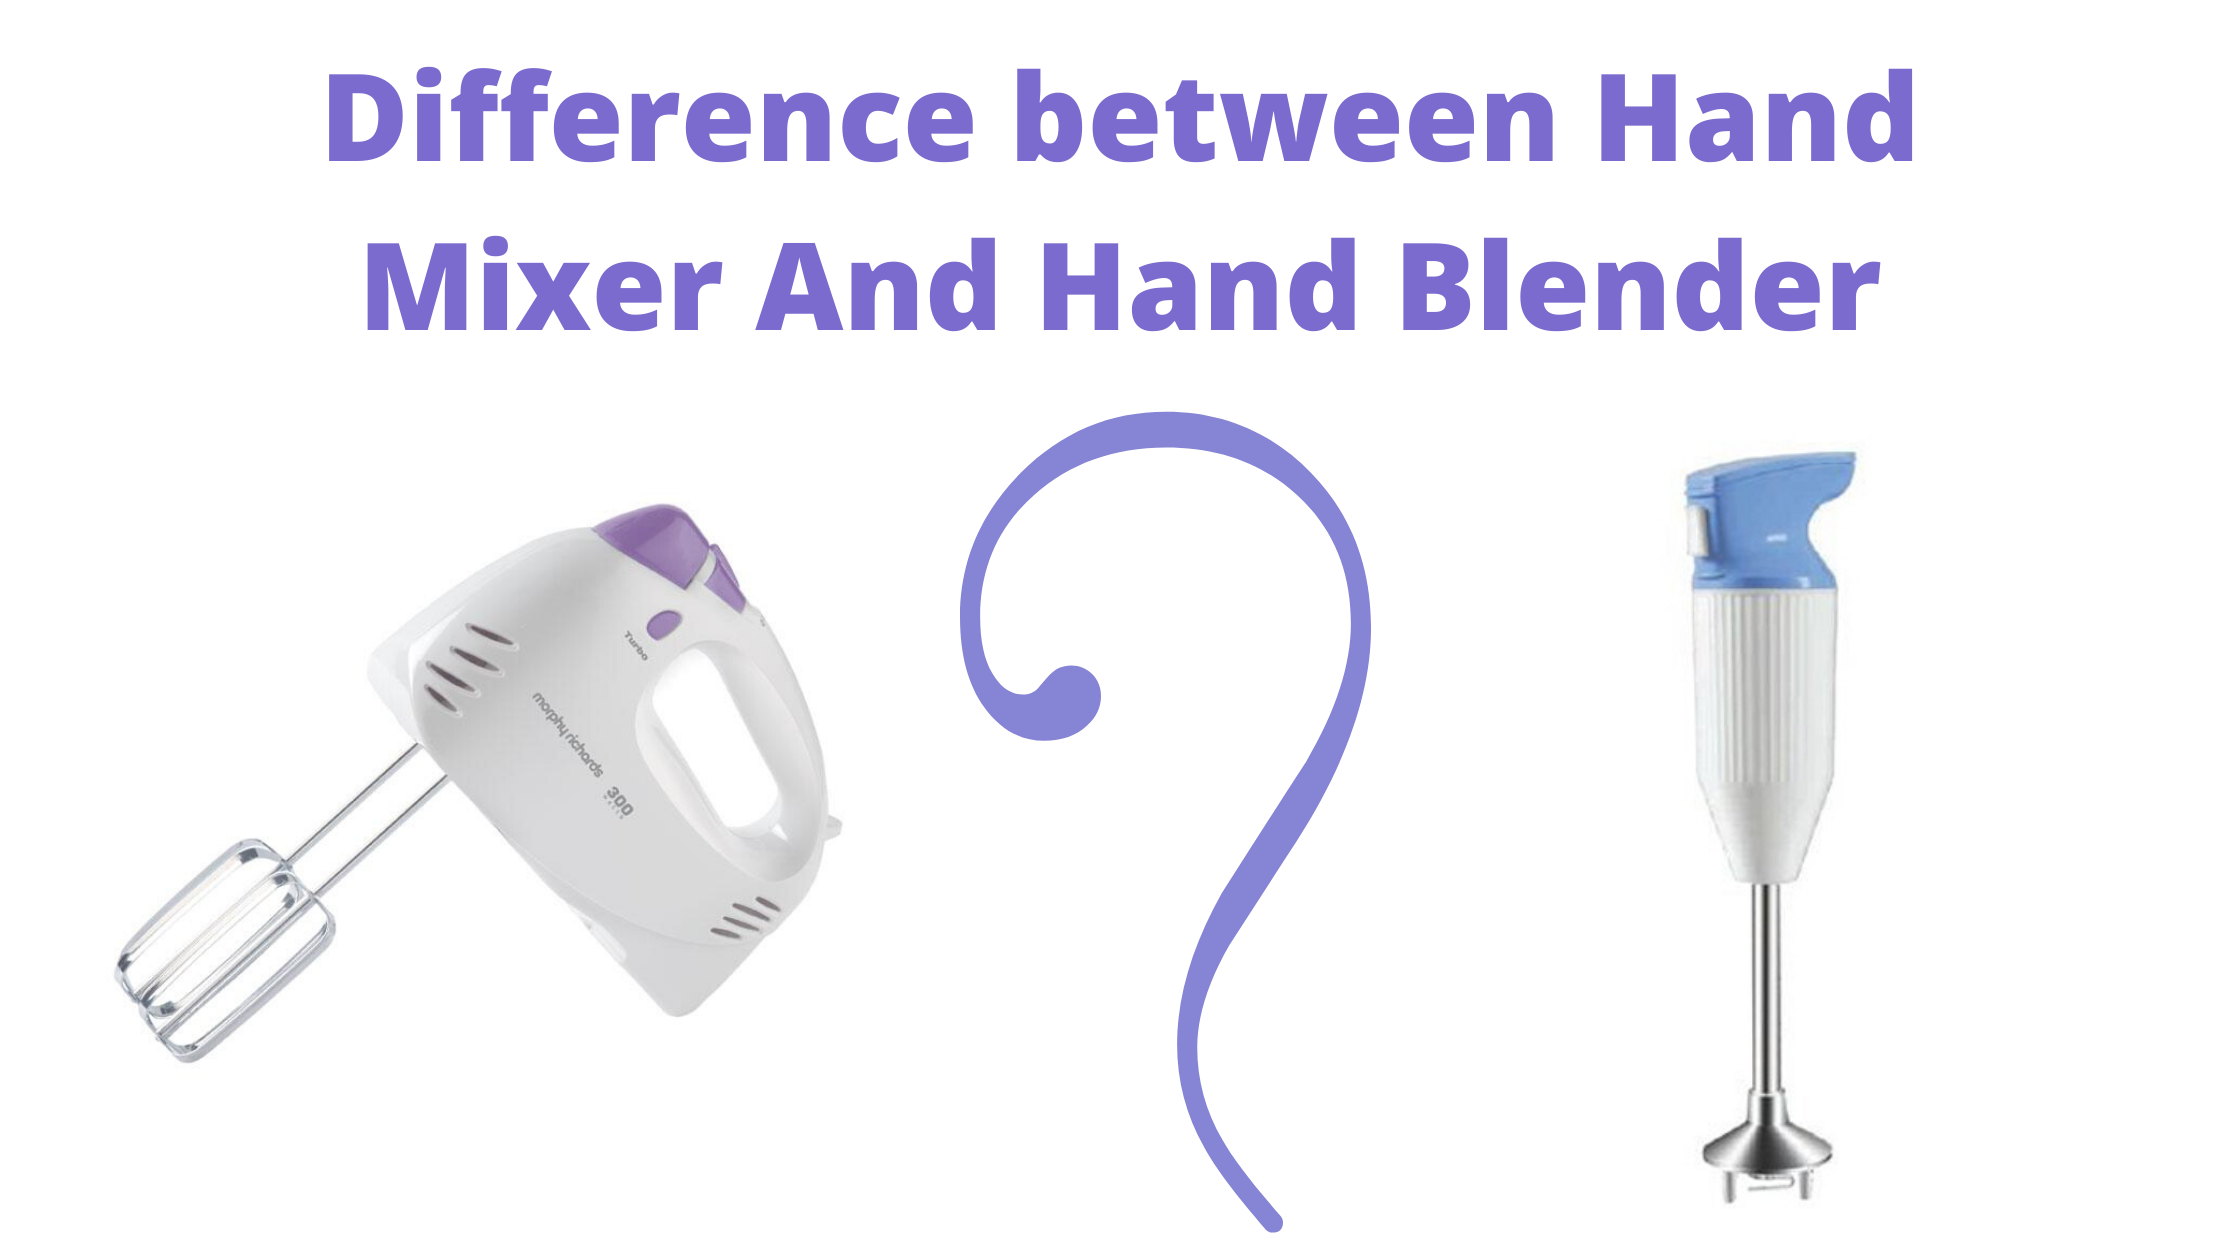 Hand blender And Hand Mixer